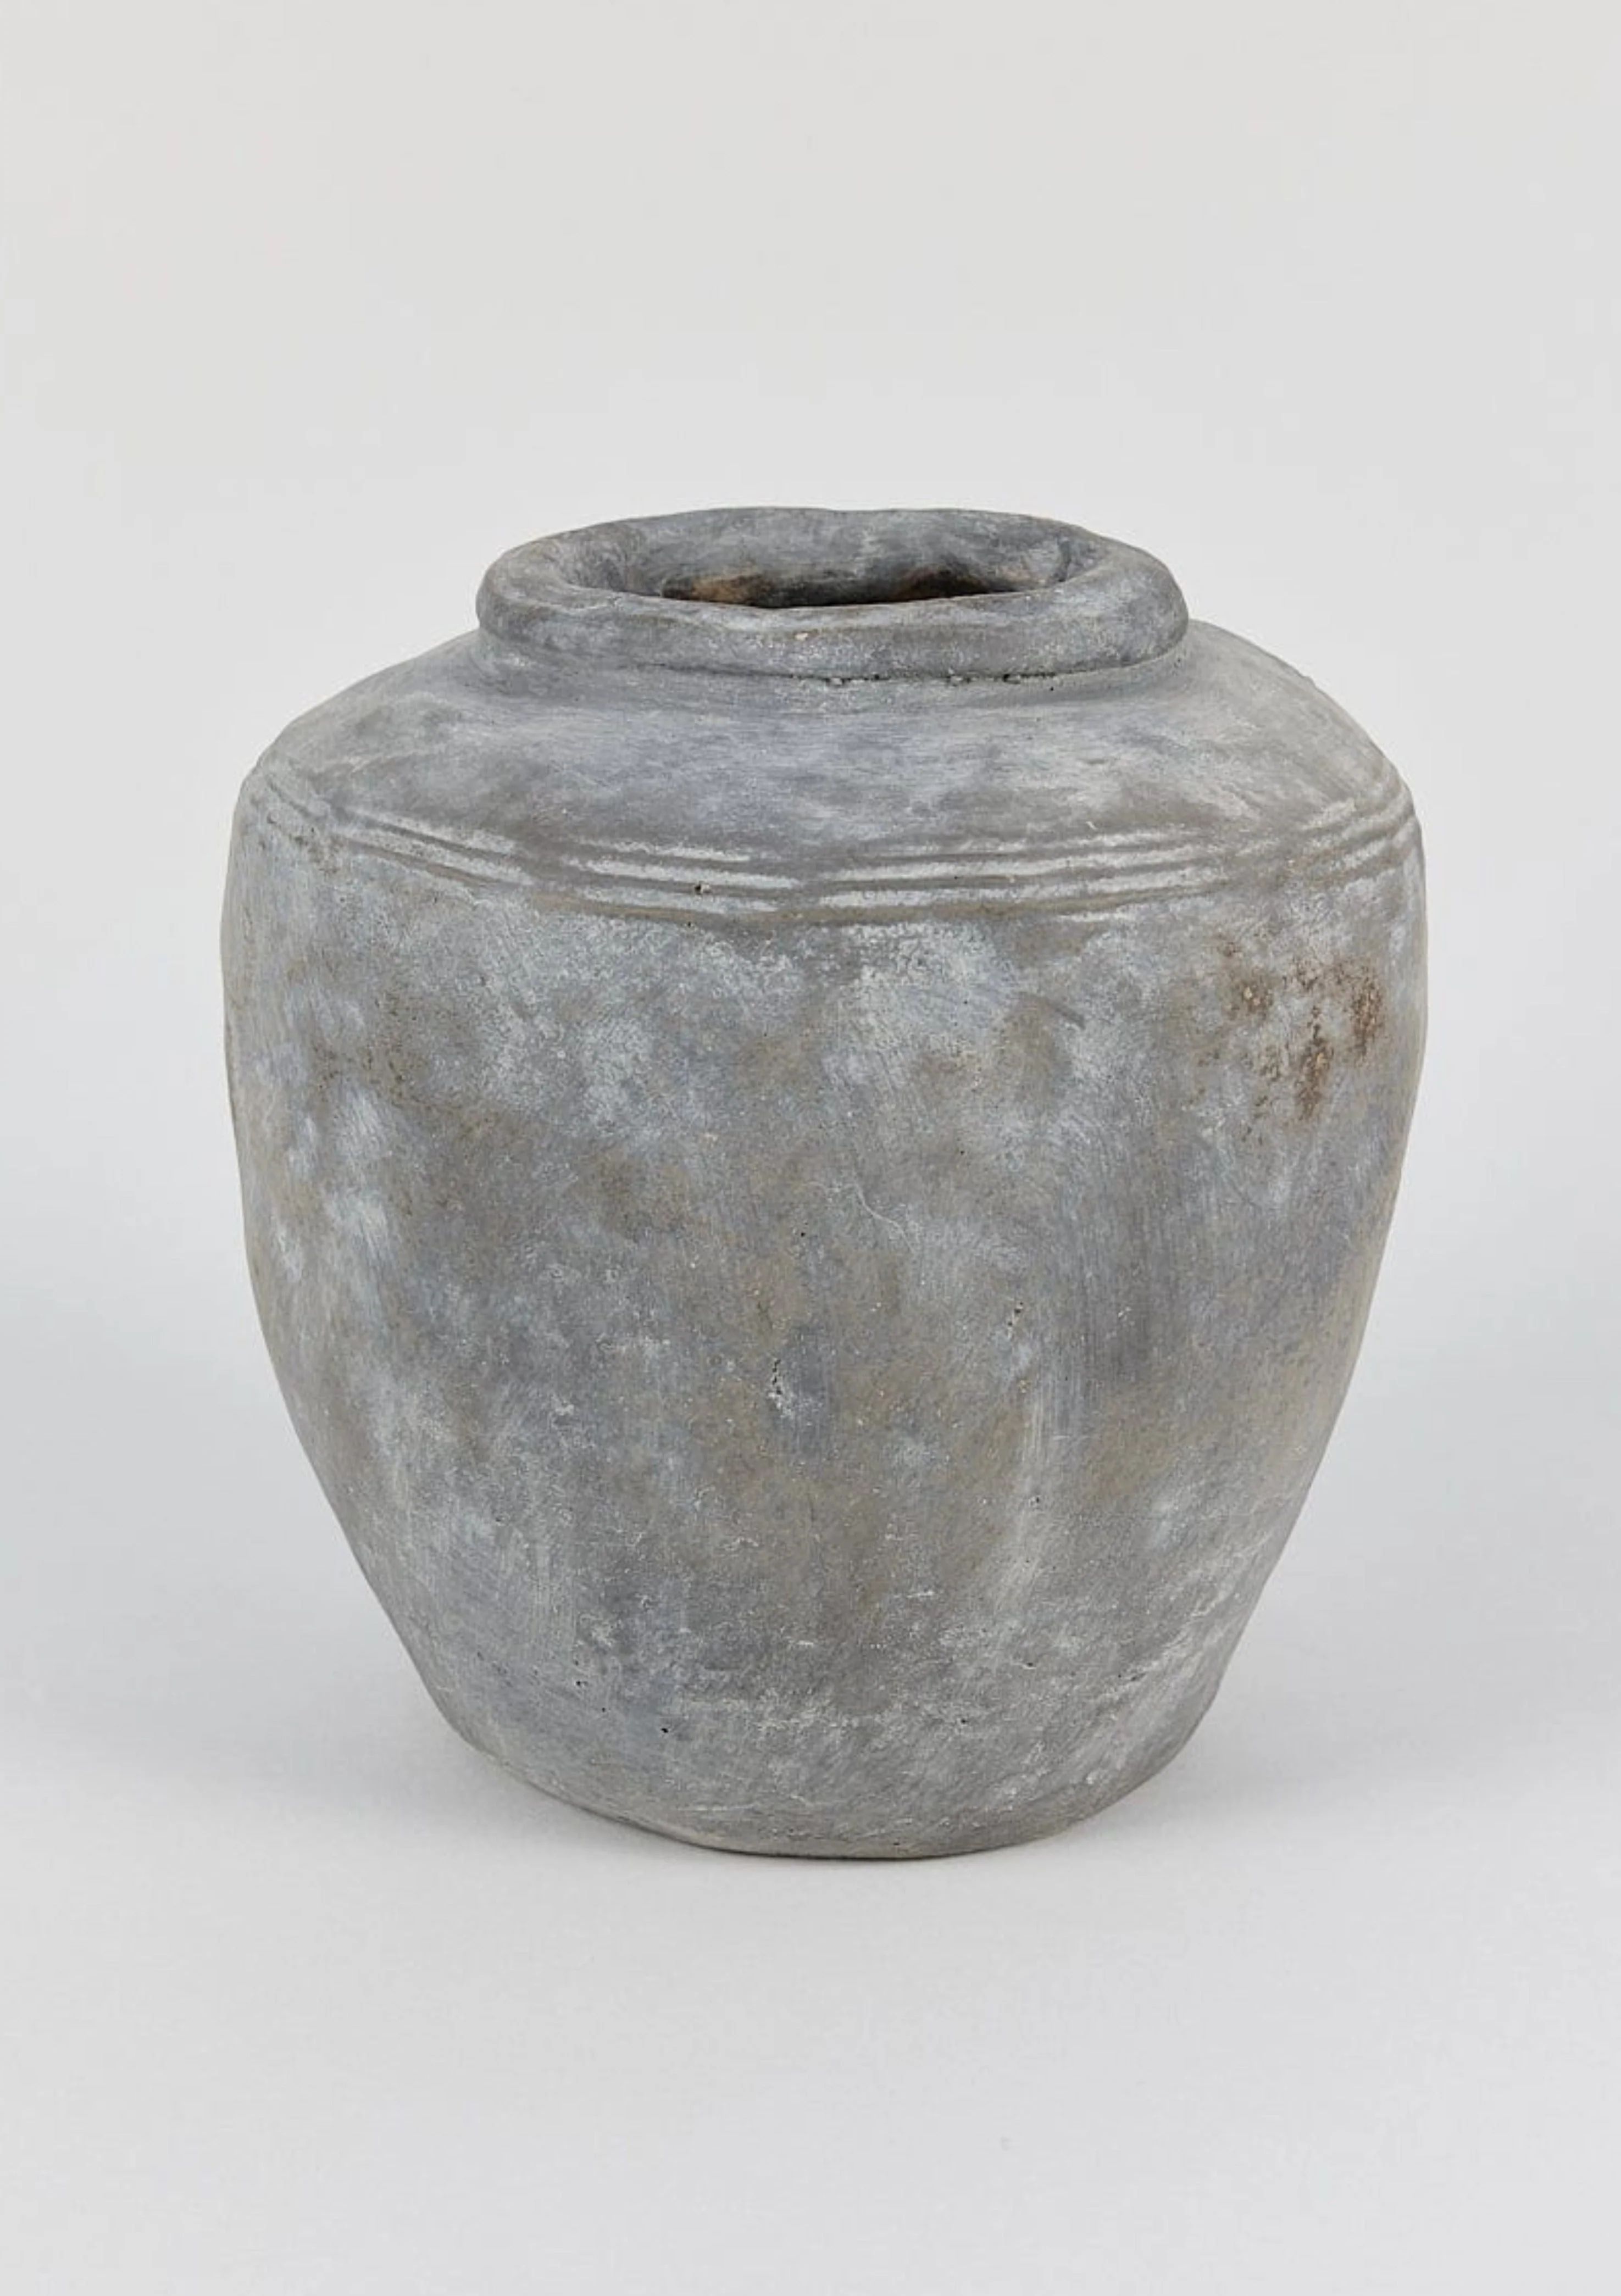 Clay Vase in Concrete Grey | Vases for the Best Value at Afloral.com | Afloral